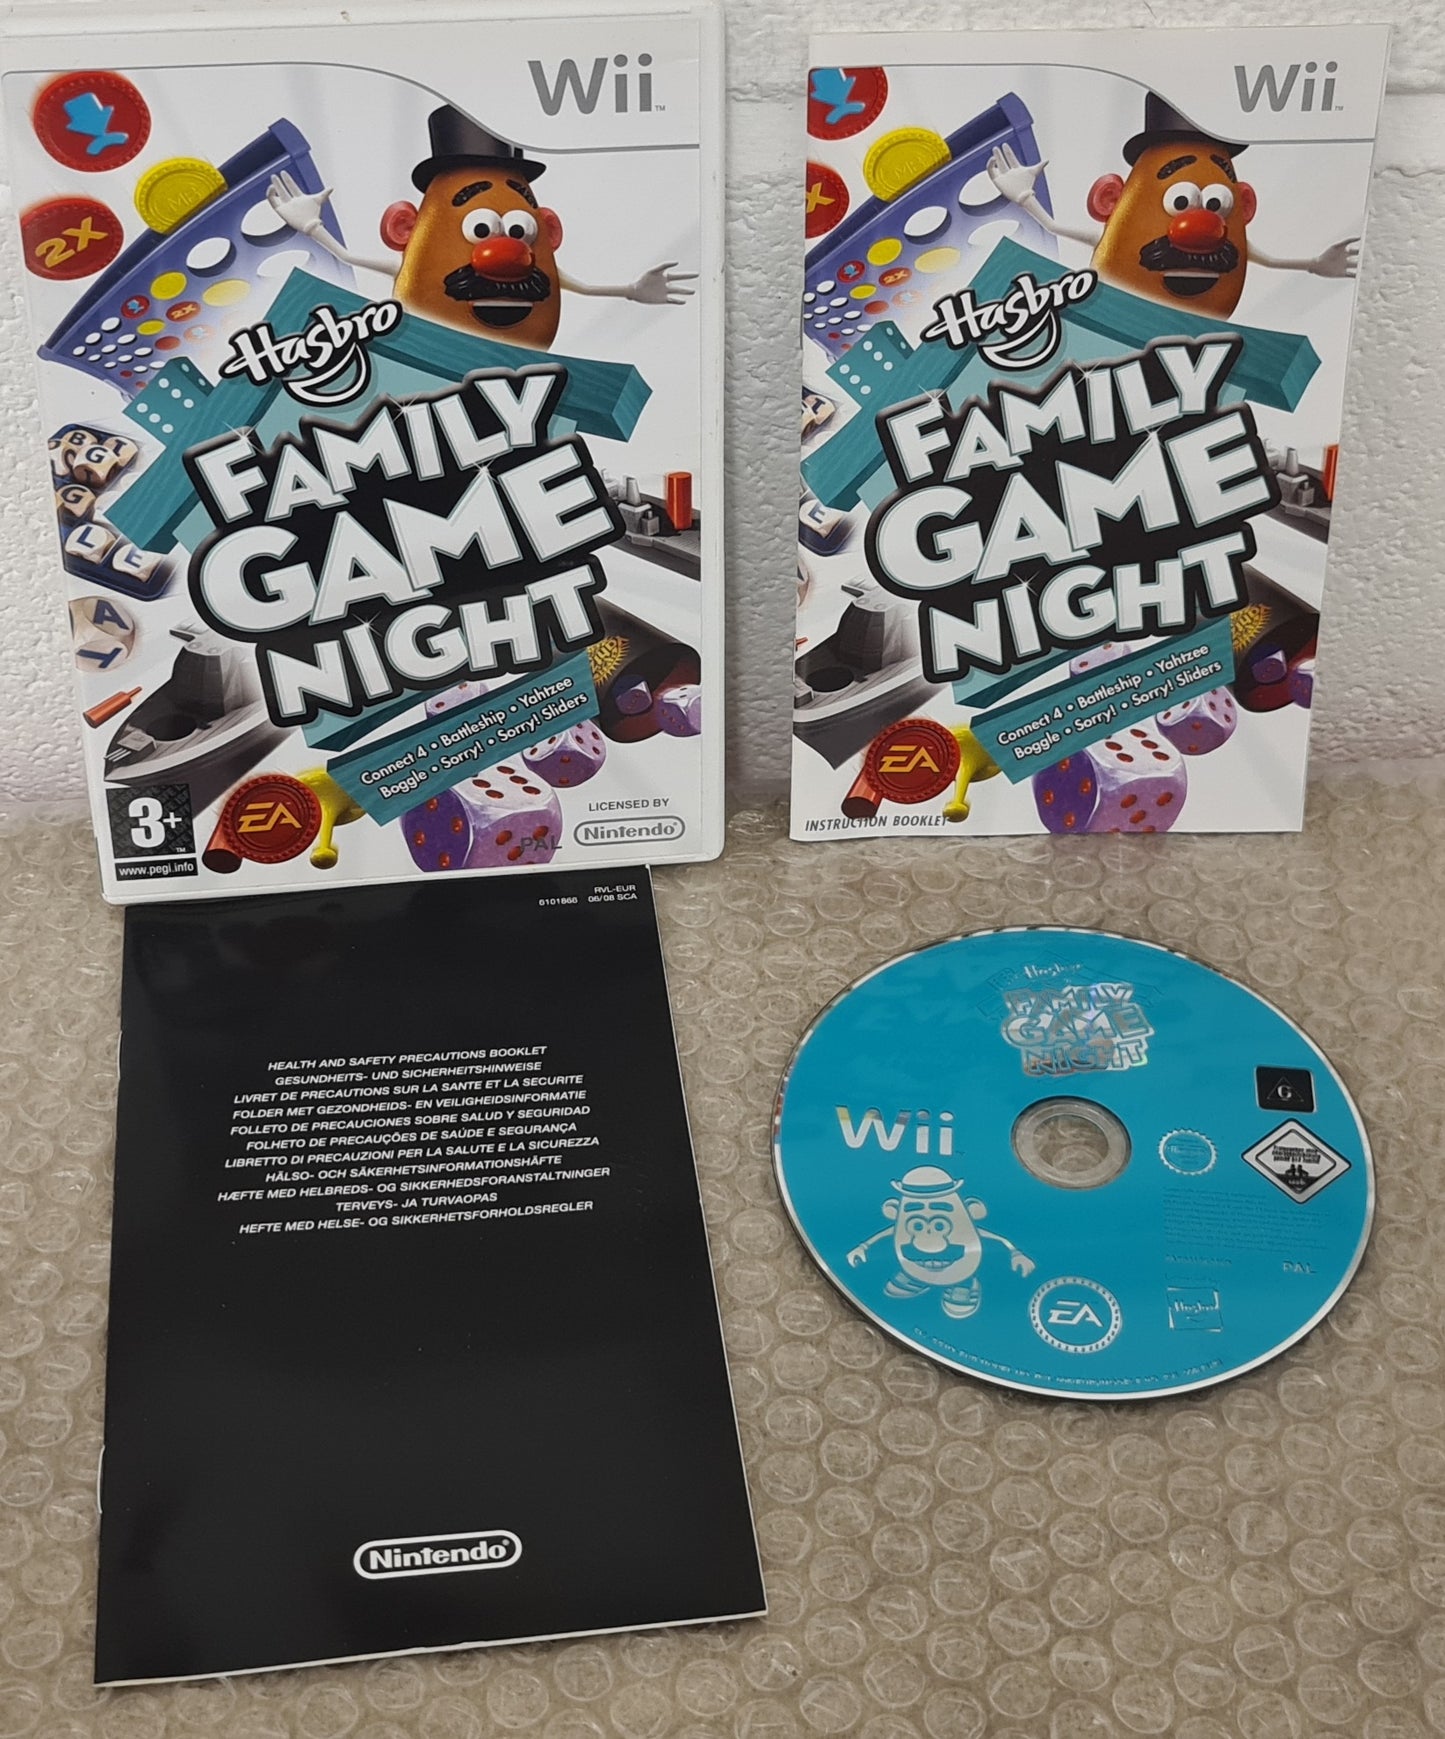 Hasbro Family Game Night Nintendo Wii Game